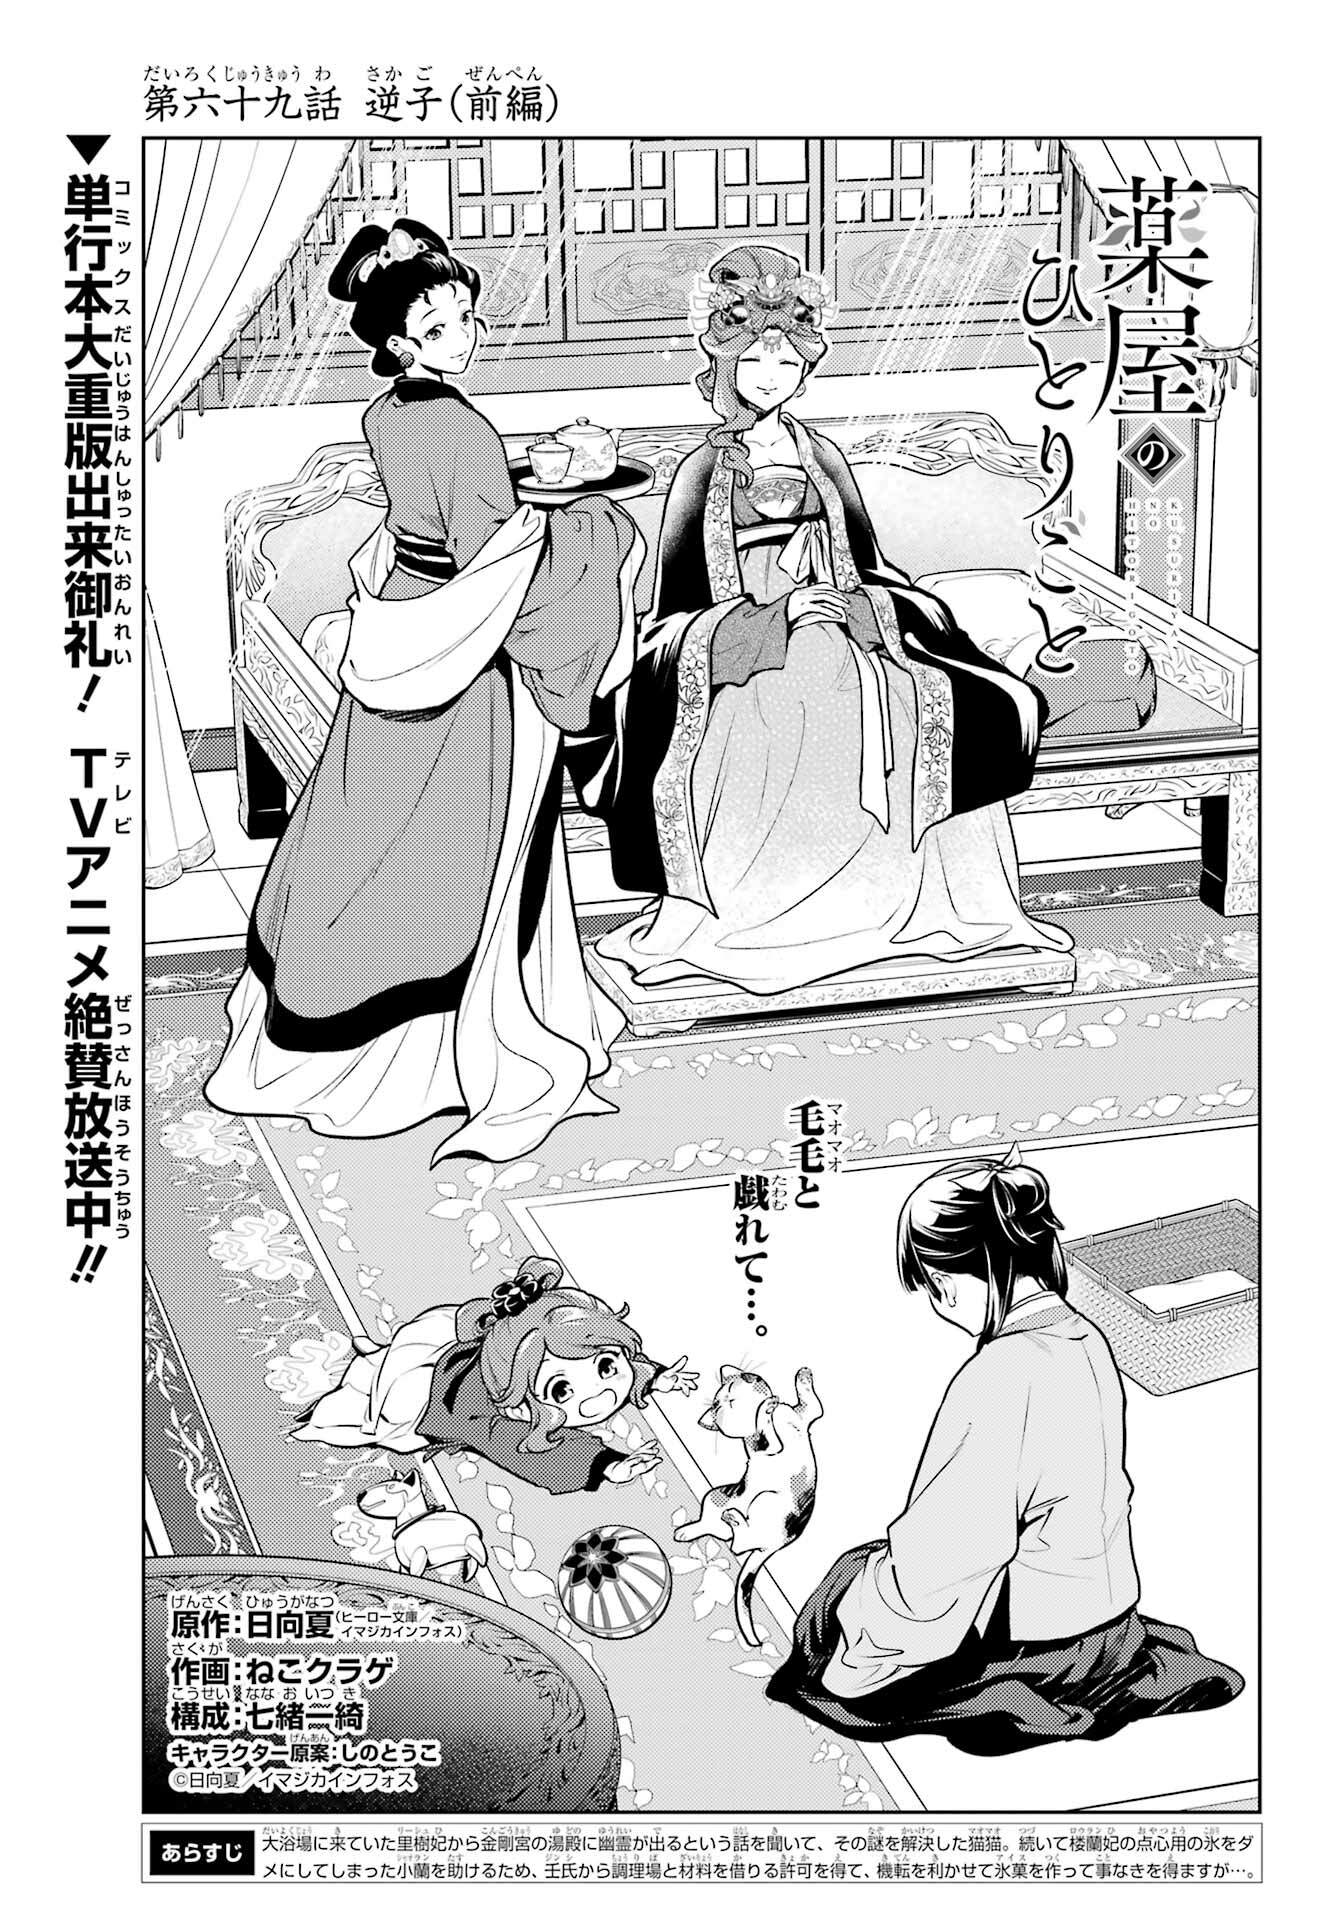 Kusuriya no Hitorigoto - Chapter 69.1 - Page 1